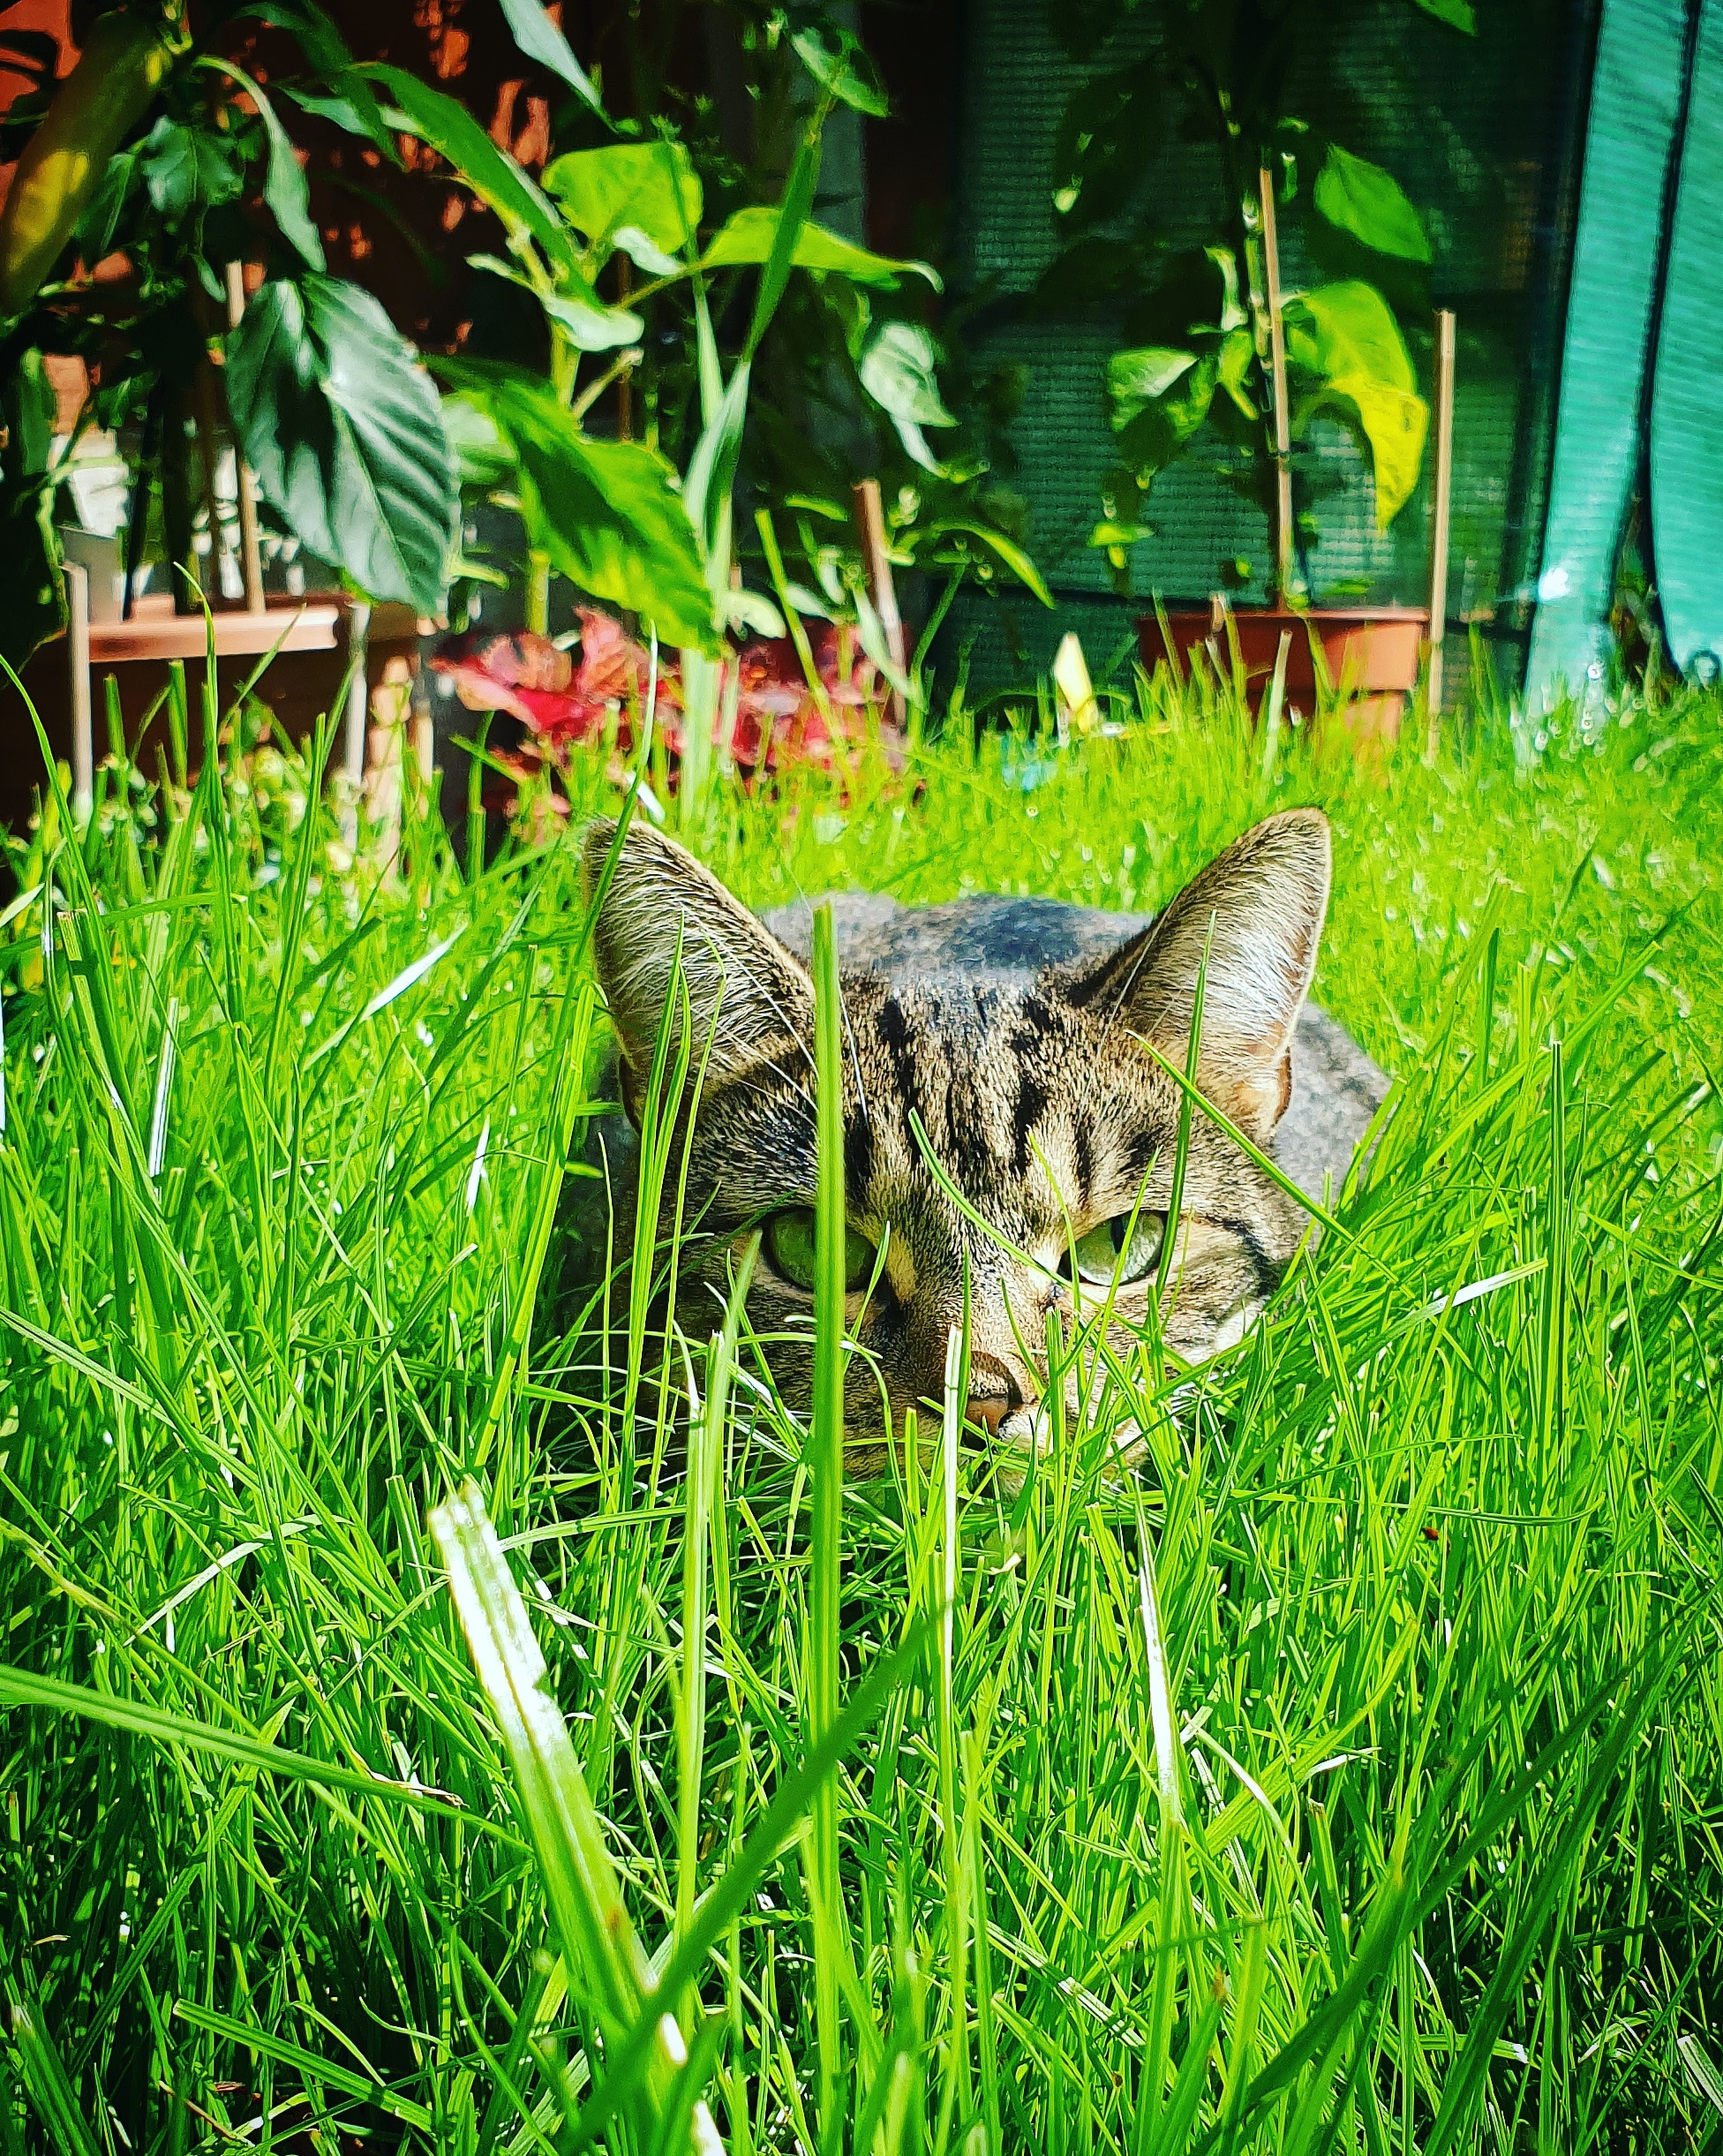 Nickys cat Misty exploring in the garden